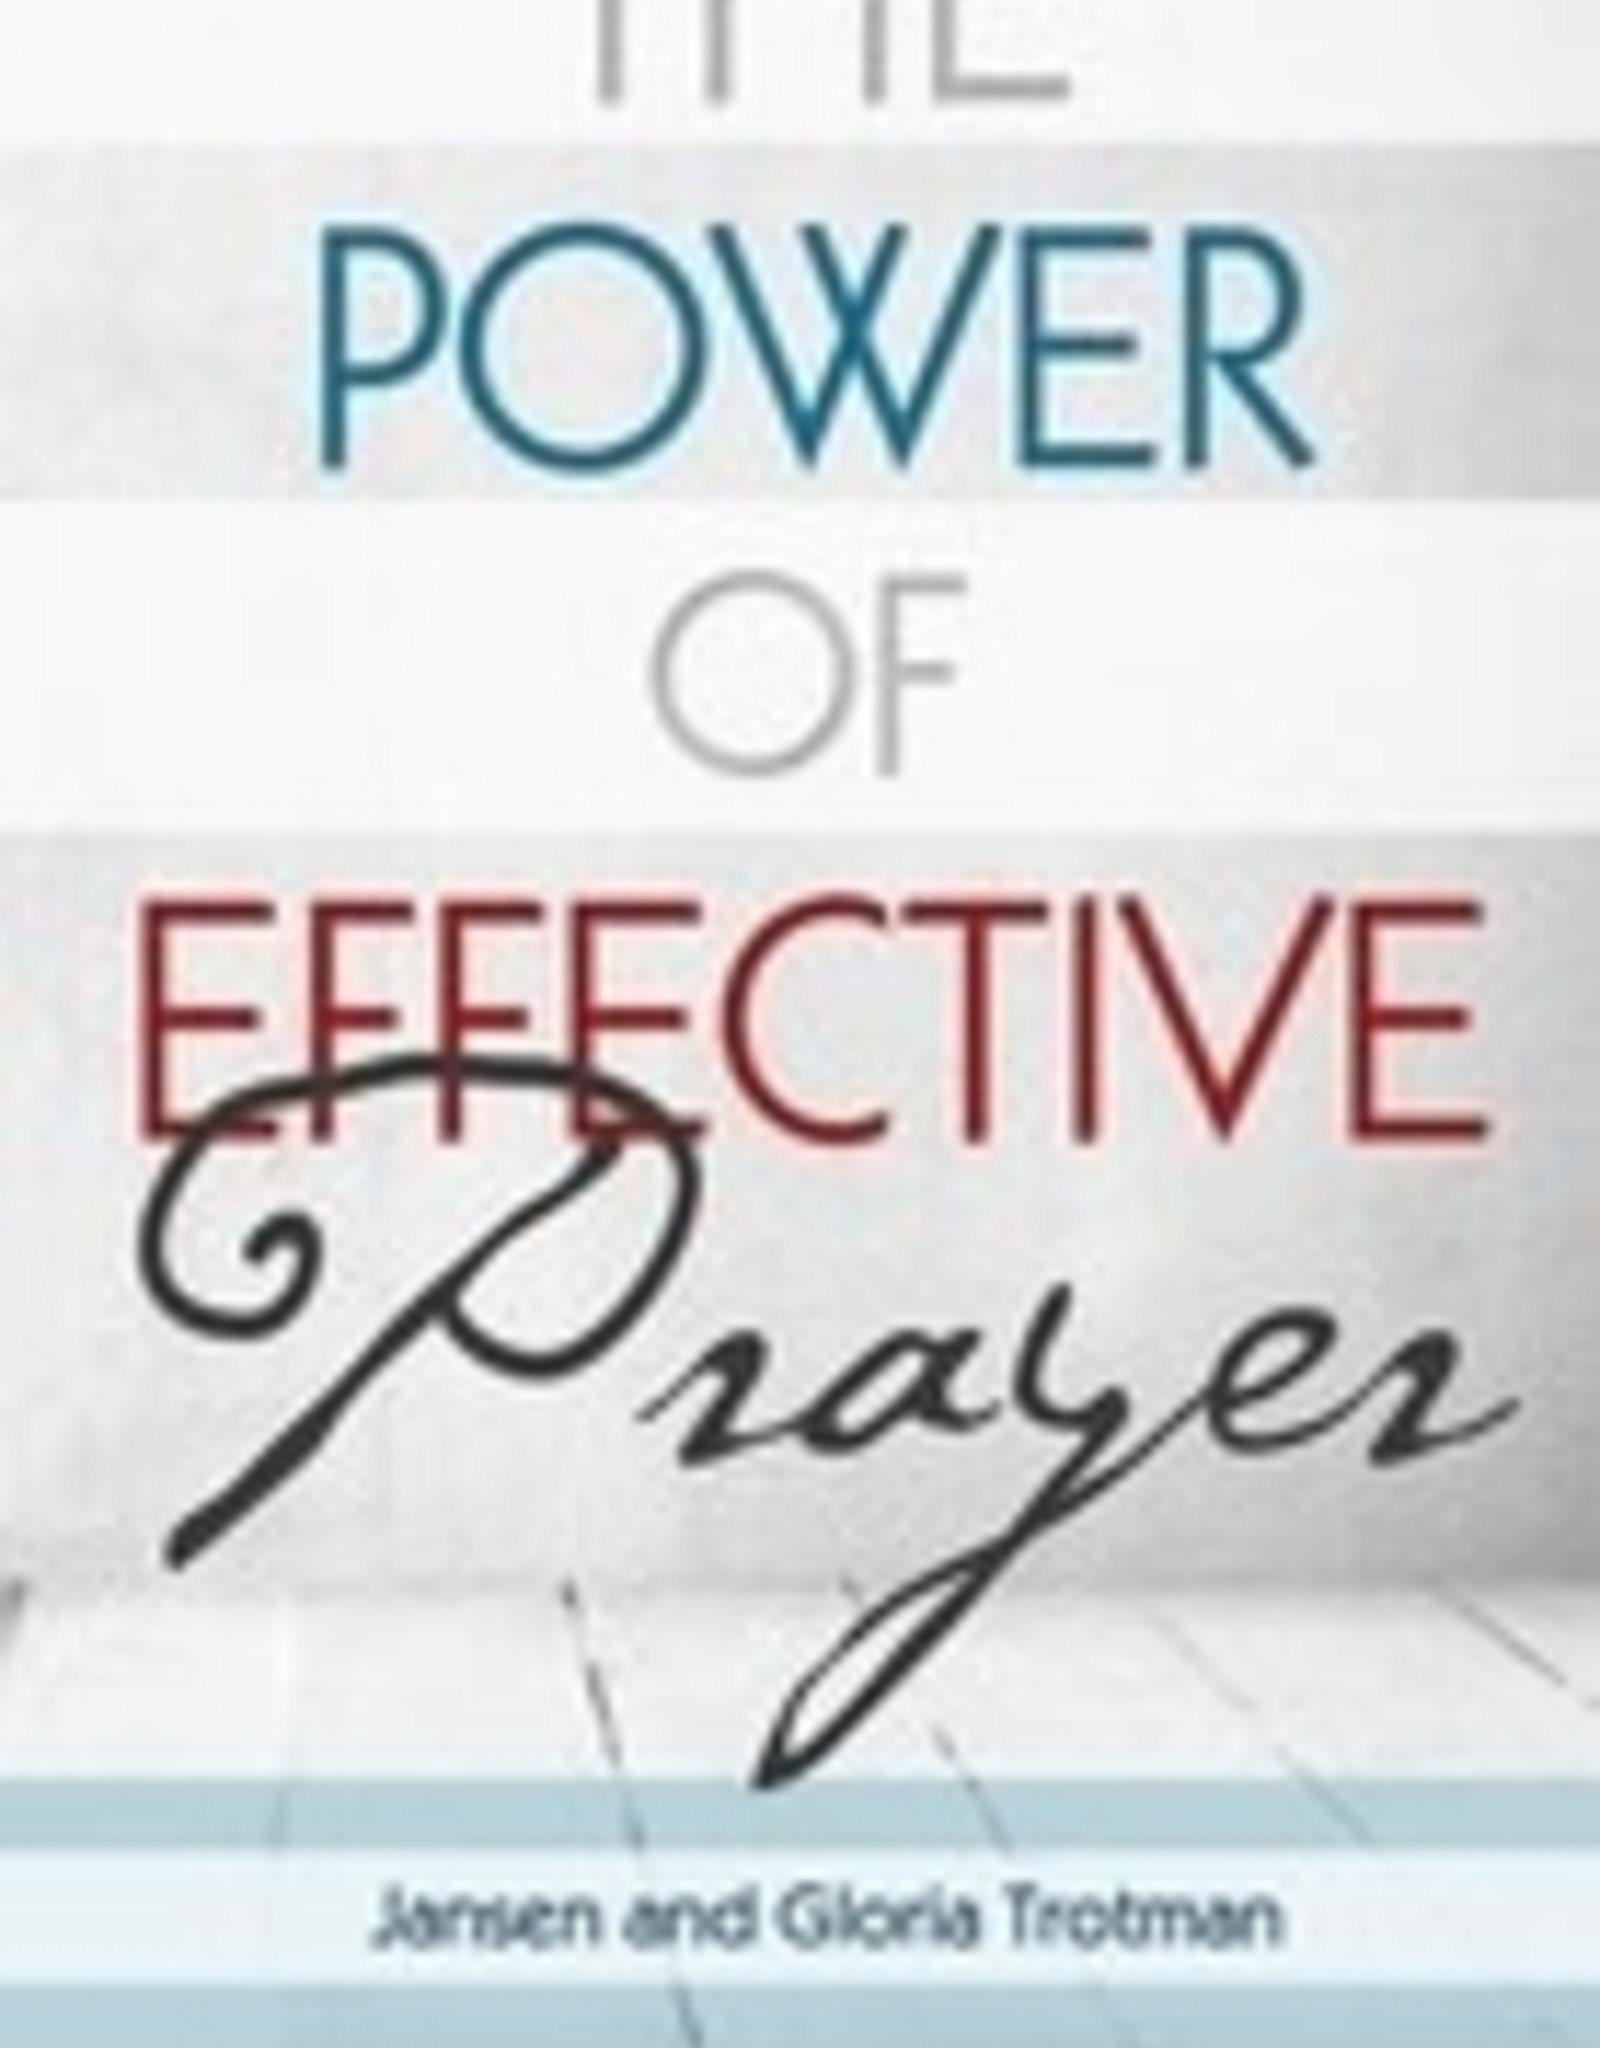 Jansen and Gloria Trotman The power of effective prayer